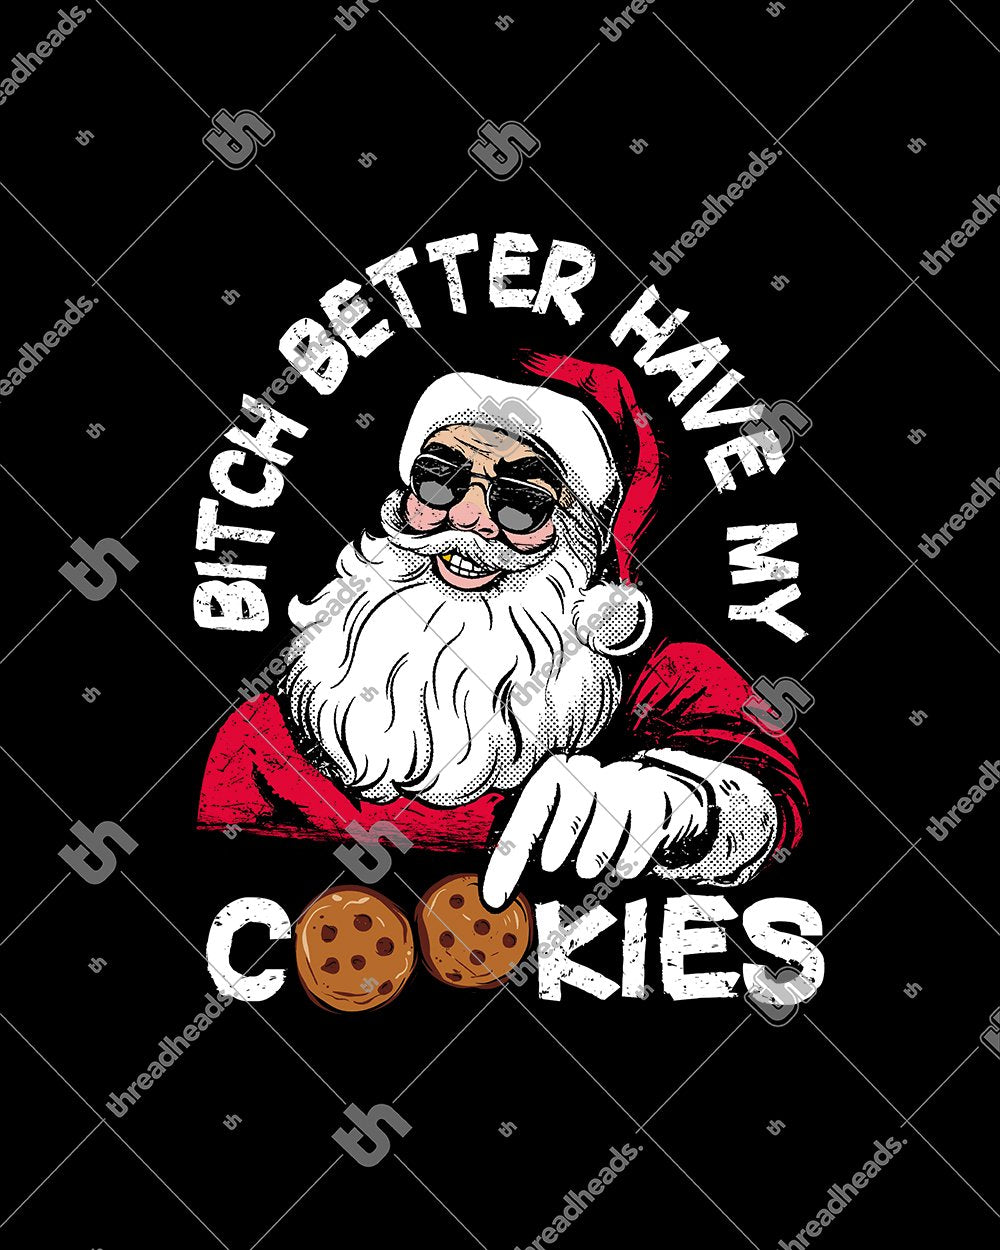 Bitch Better Have My Cookies Hoodie Australia Online #colour_black